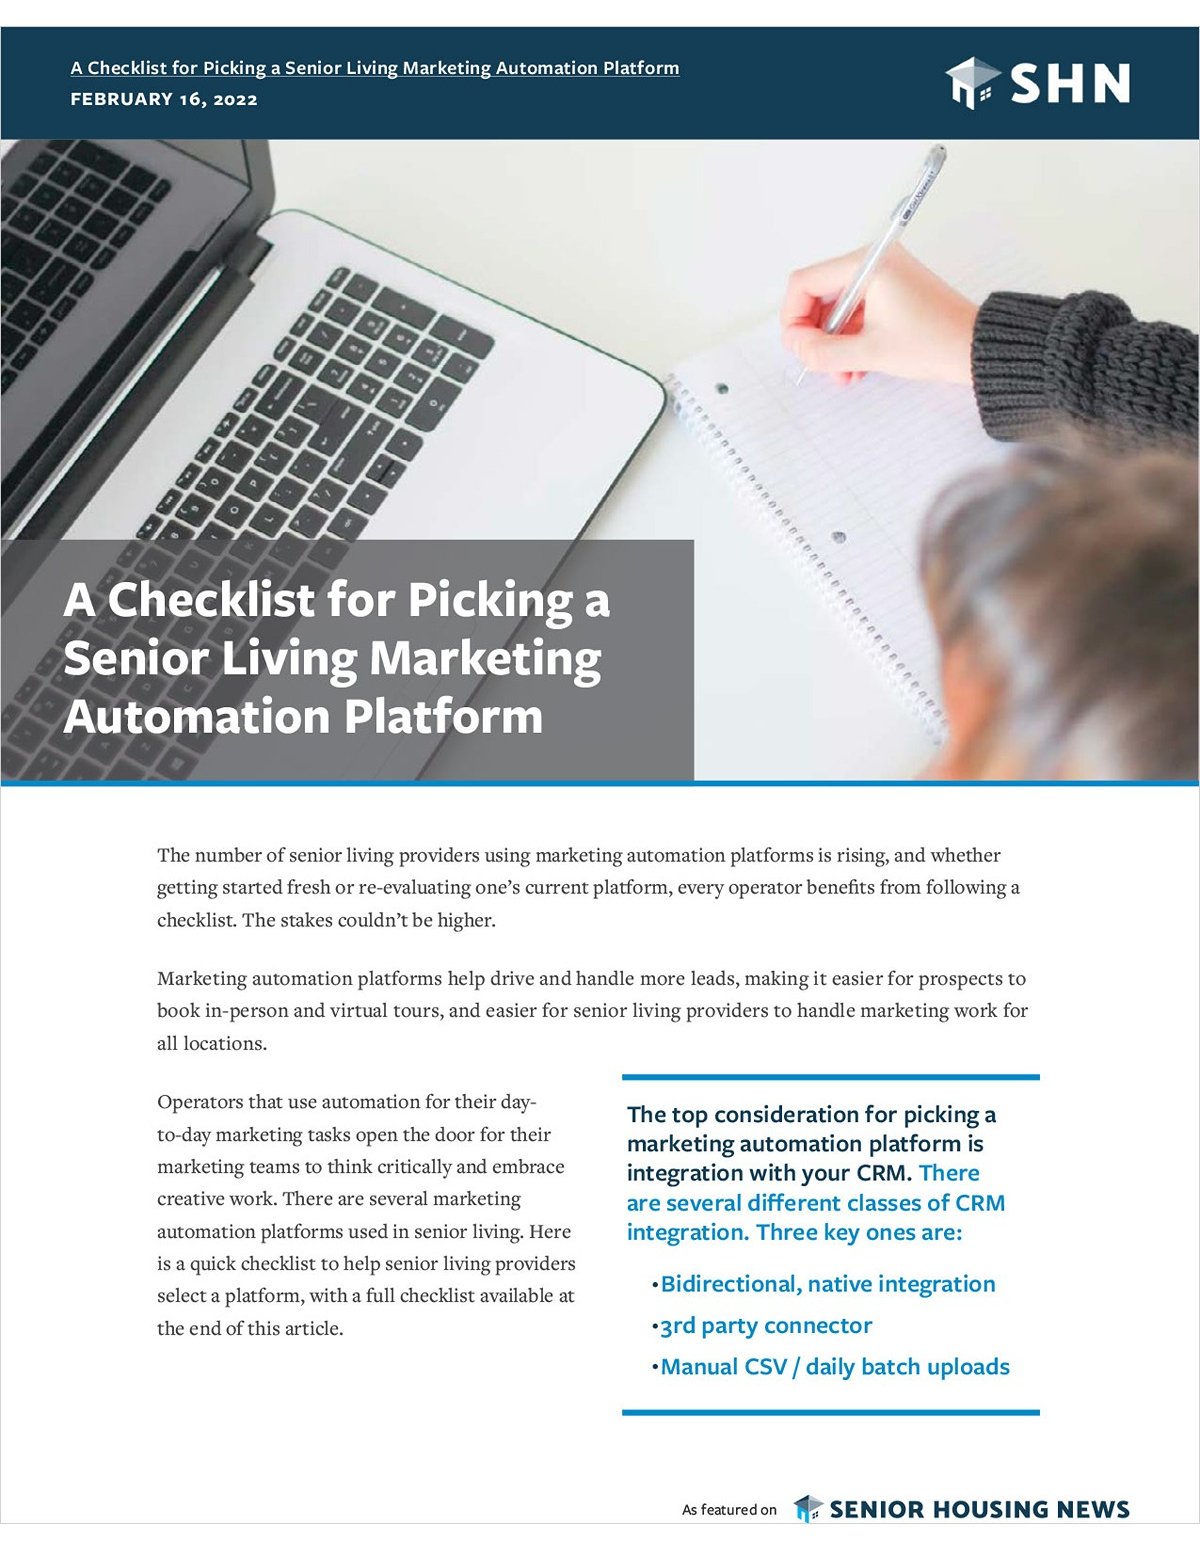 How to Pick a Senior Living Marketing Automation Platform: A Checklist